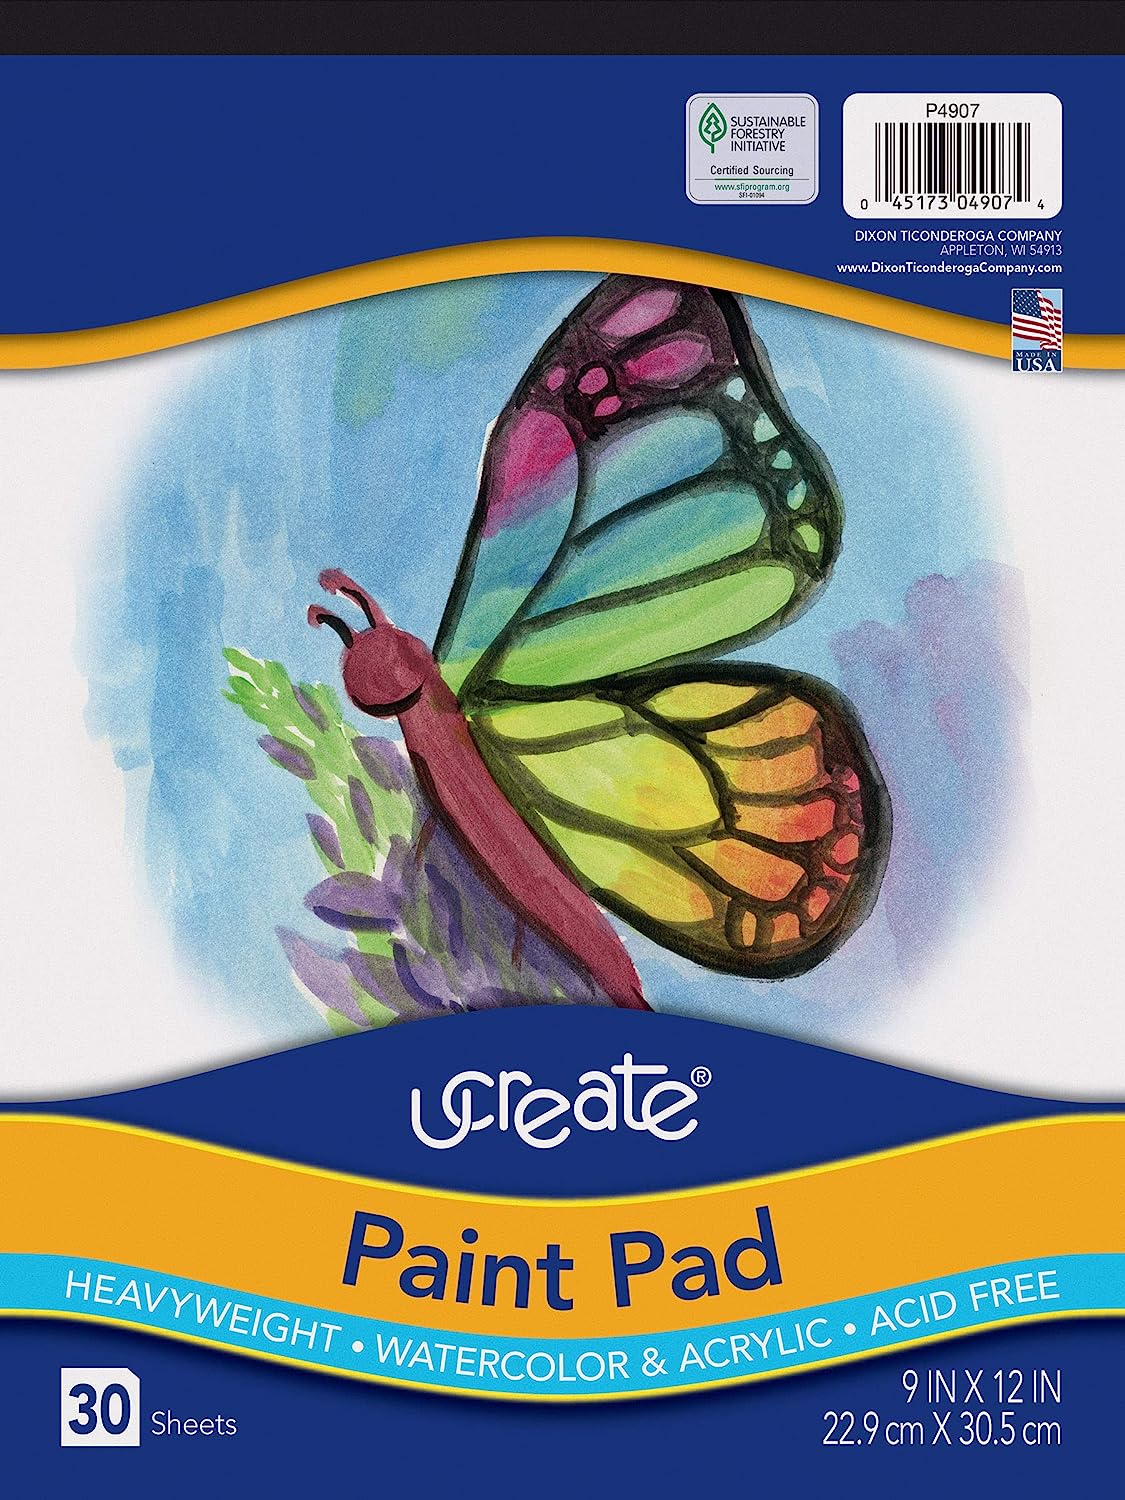 UCreate Paint Pad, 90 lb., 9